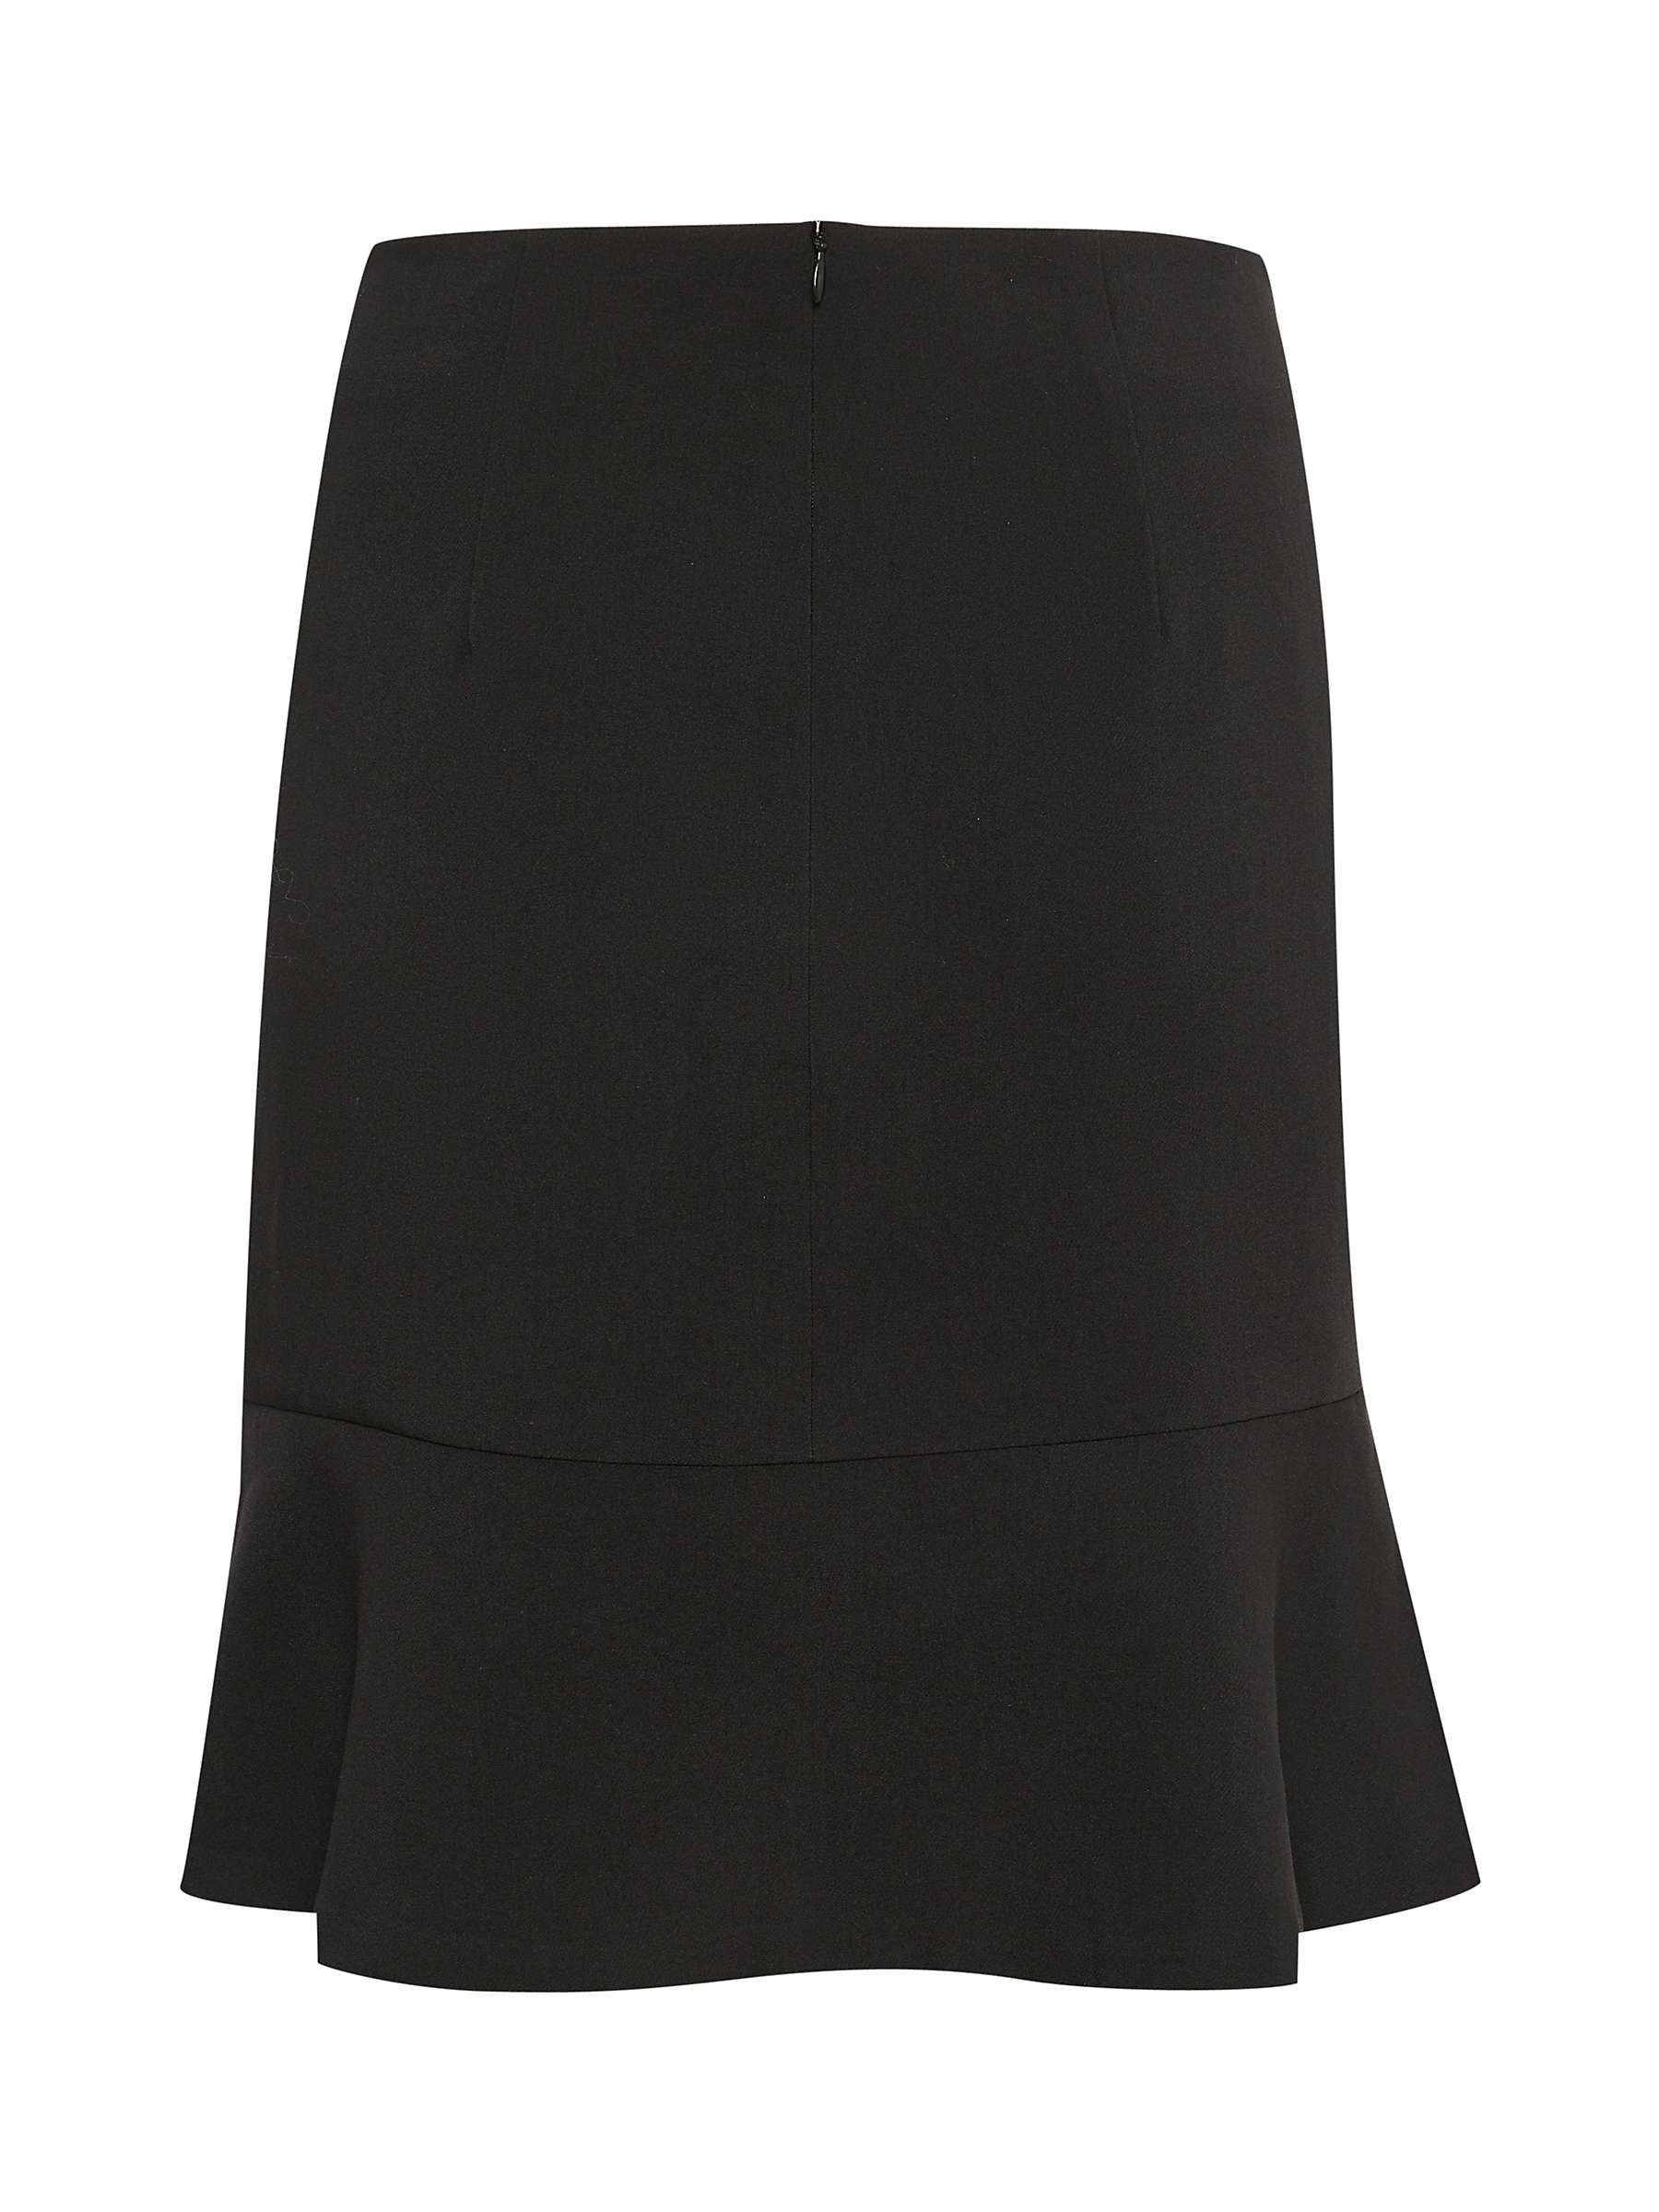 InWear Ibbie Short Skirt, Black at John Lewis & Partners